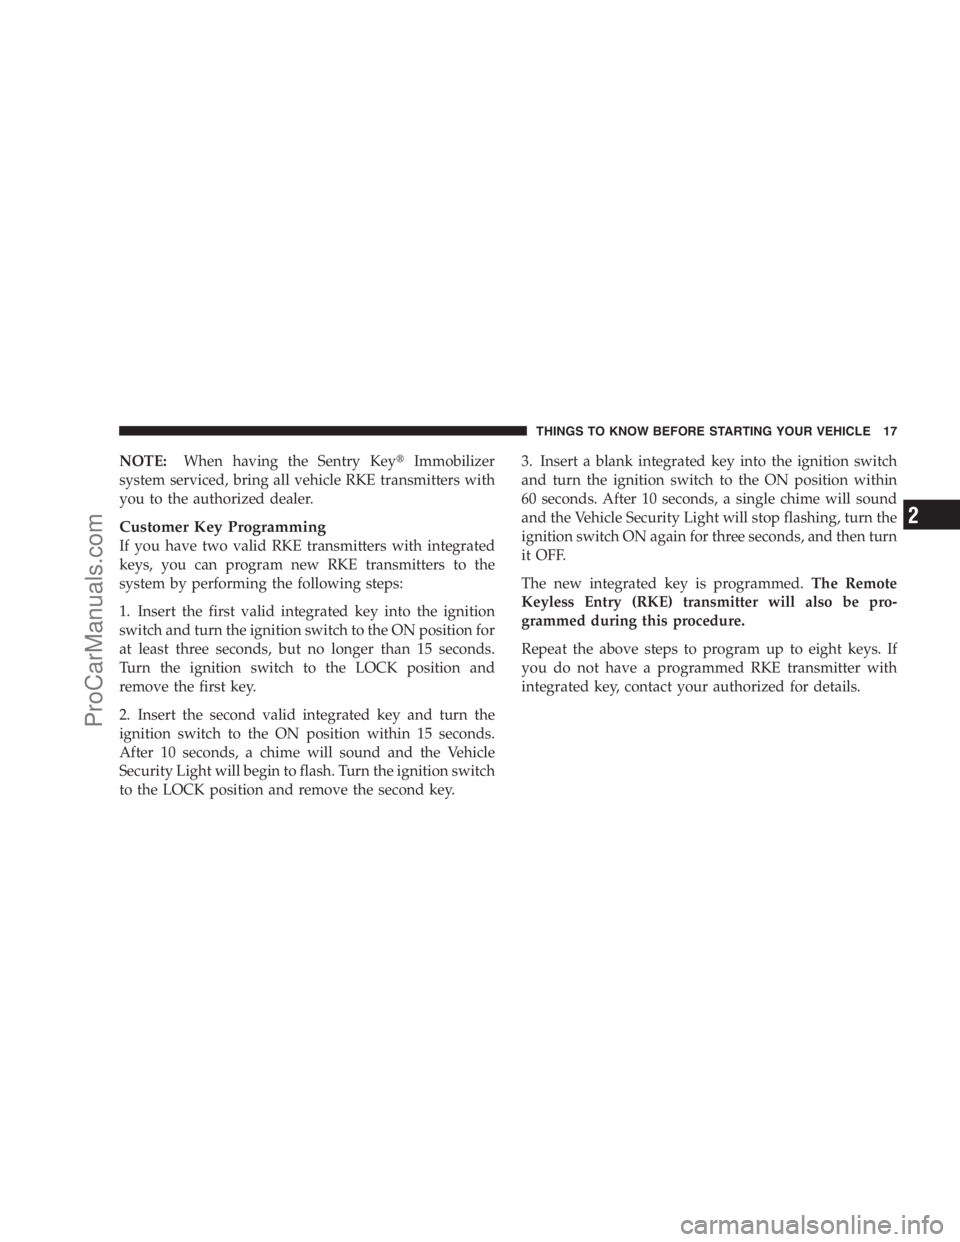 DODGE CARAVAN 2009  Owners Manual NOTE:When having the Sentry KeyImmobilizer
system serviced, bring all vehicle RKE transmitters with
you to the authorized dealer.
Customer Key Programming
If you have two valid RKE transmitters with 